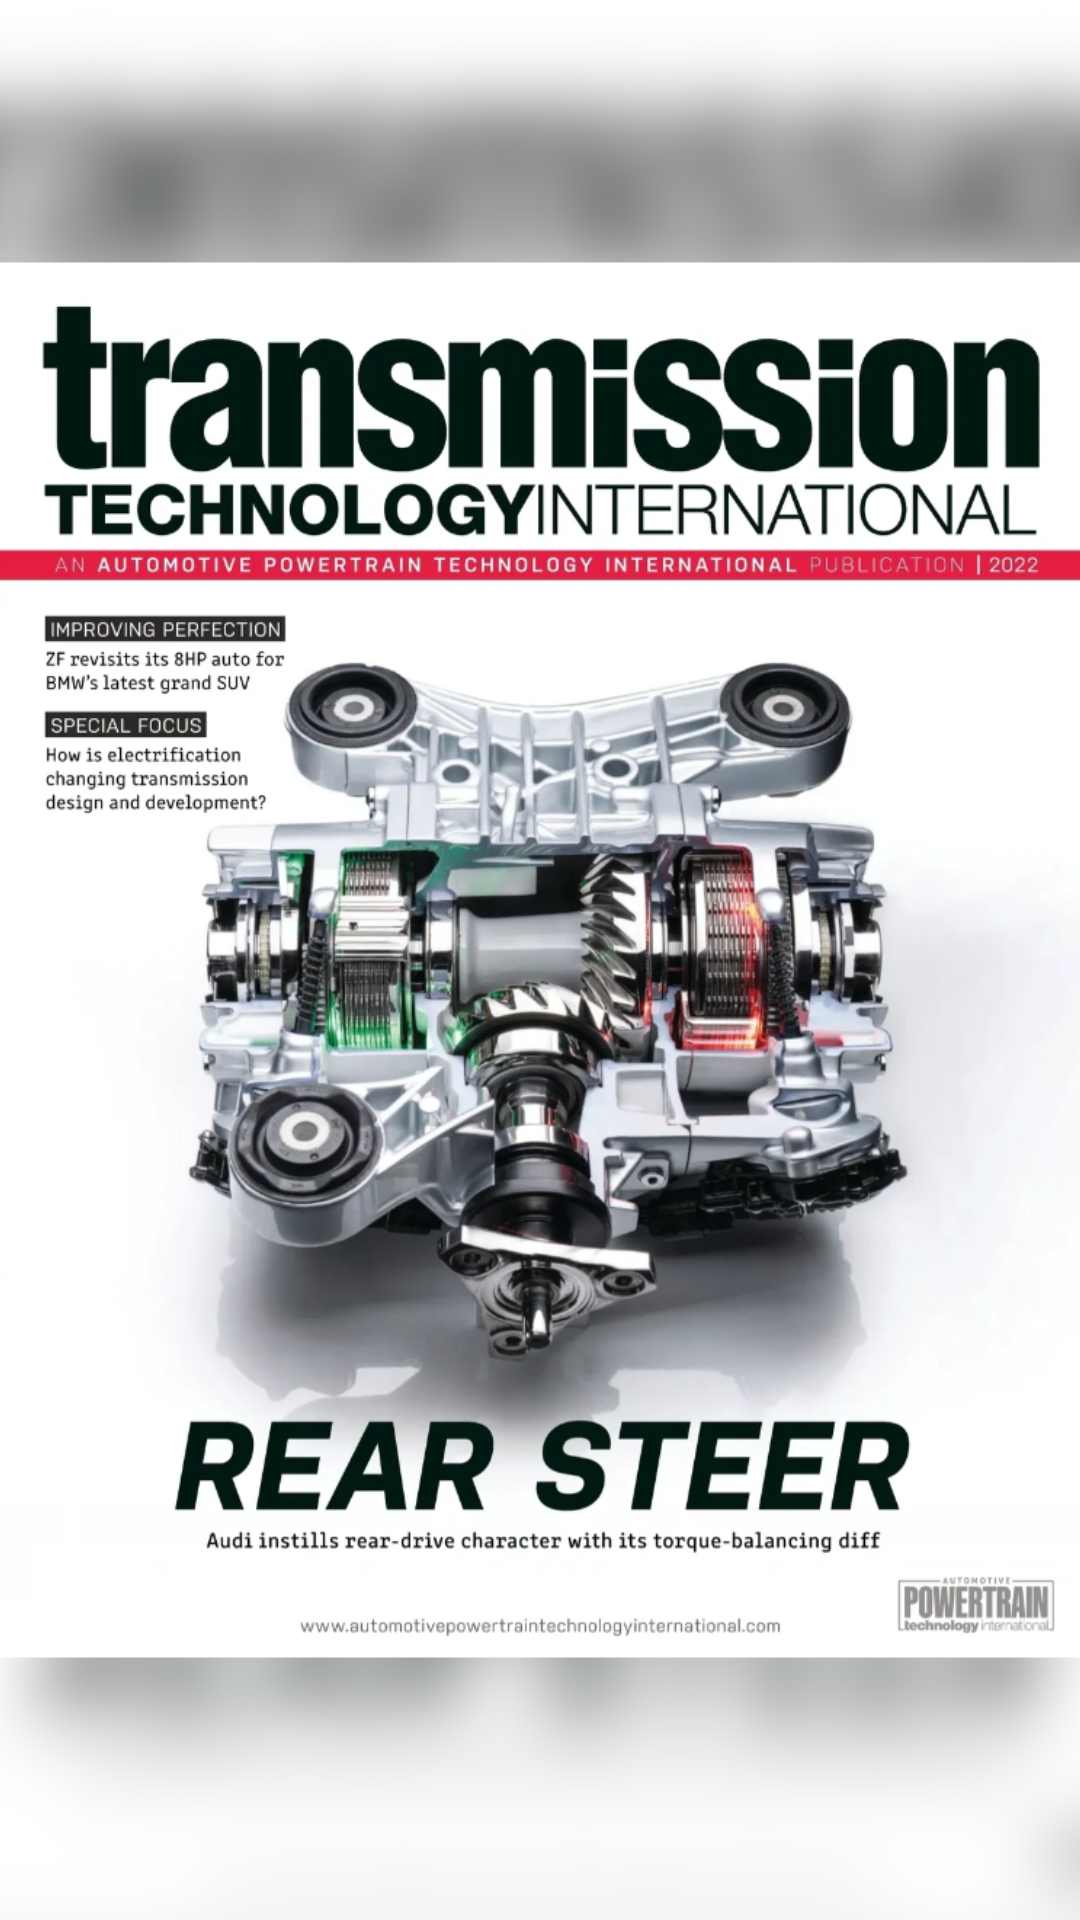 Transmission Technology International 2022 'Rear Steer' front cover.